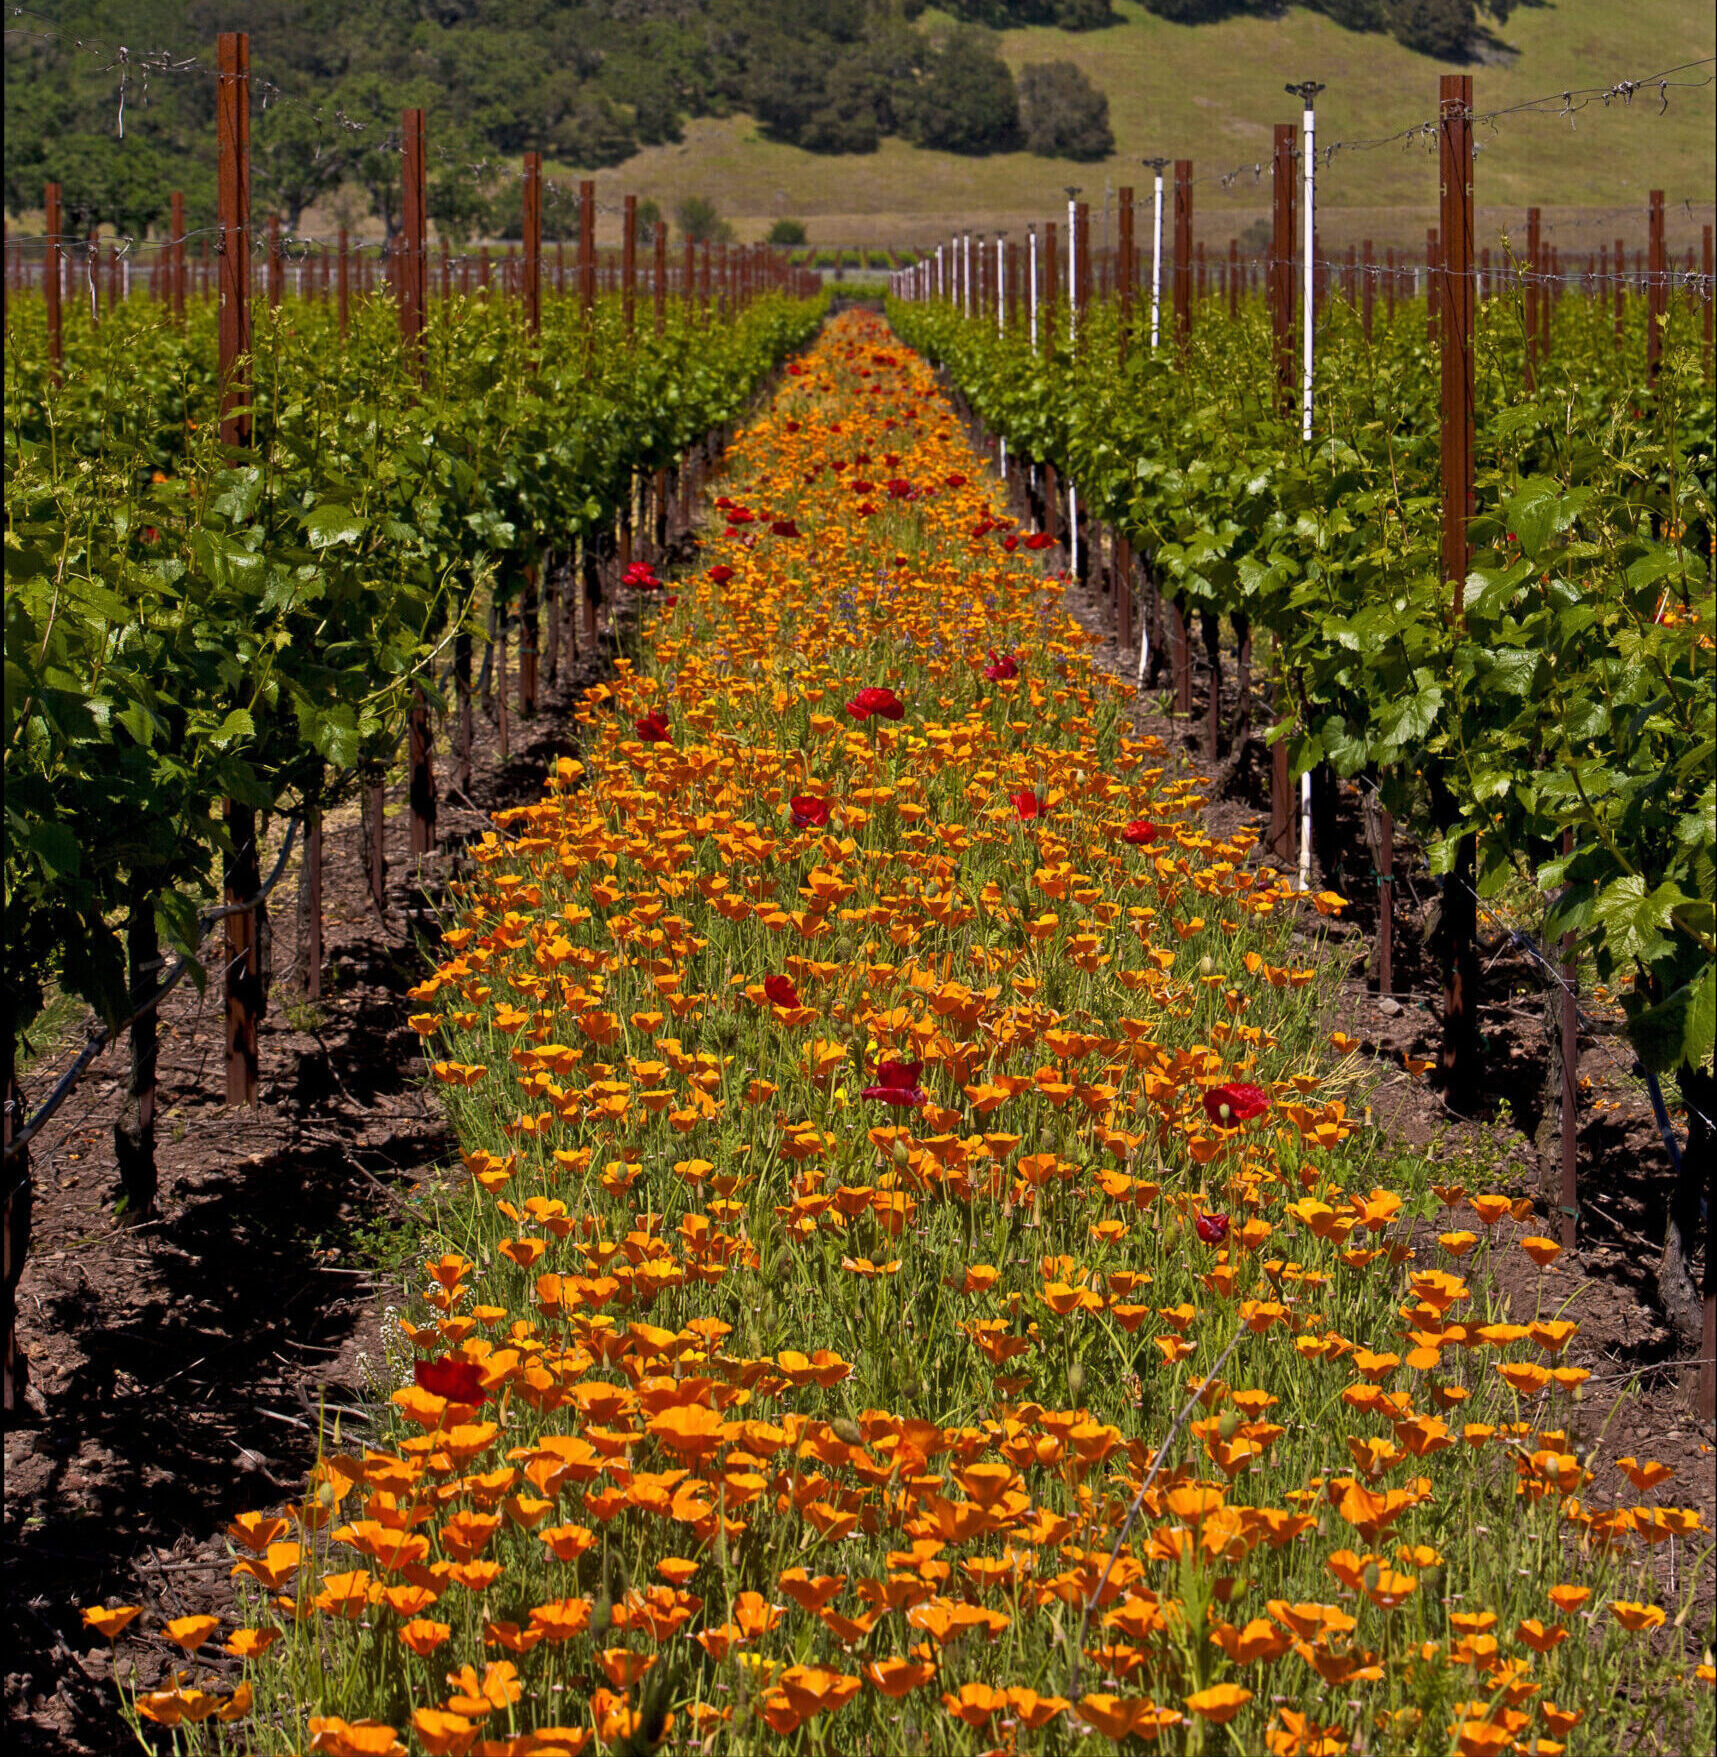 cover crops spring vineyard